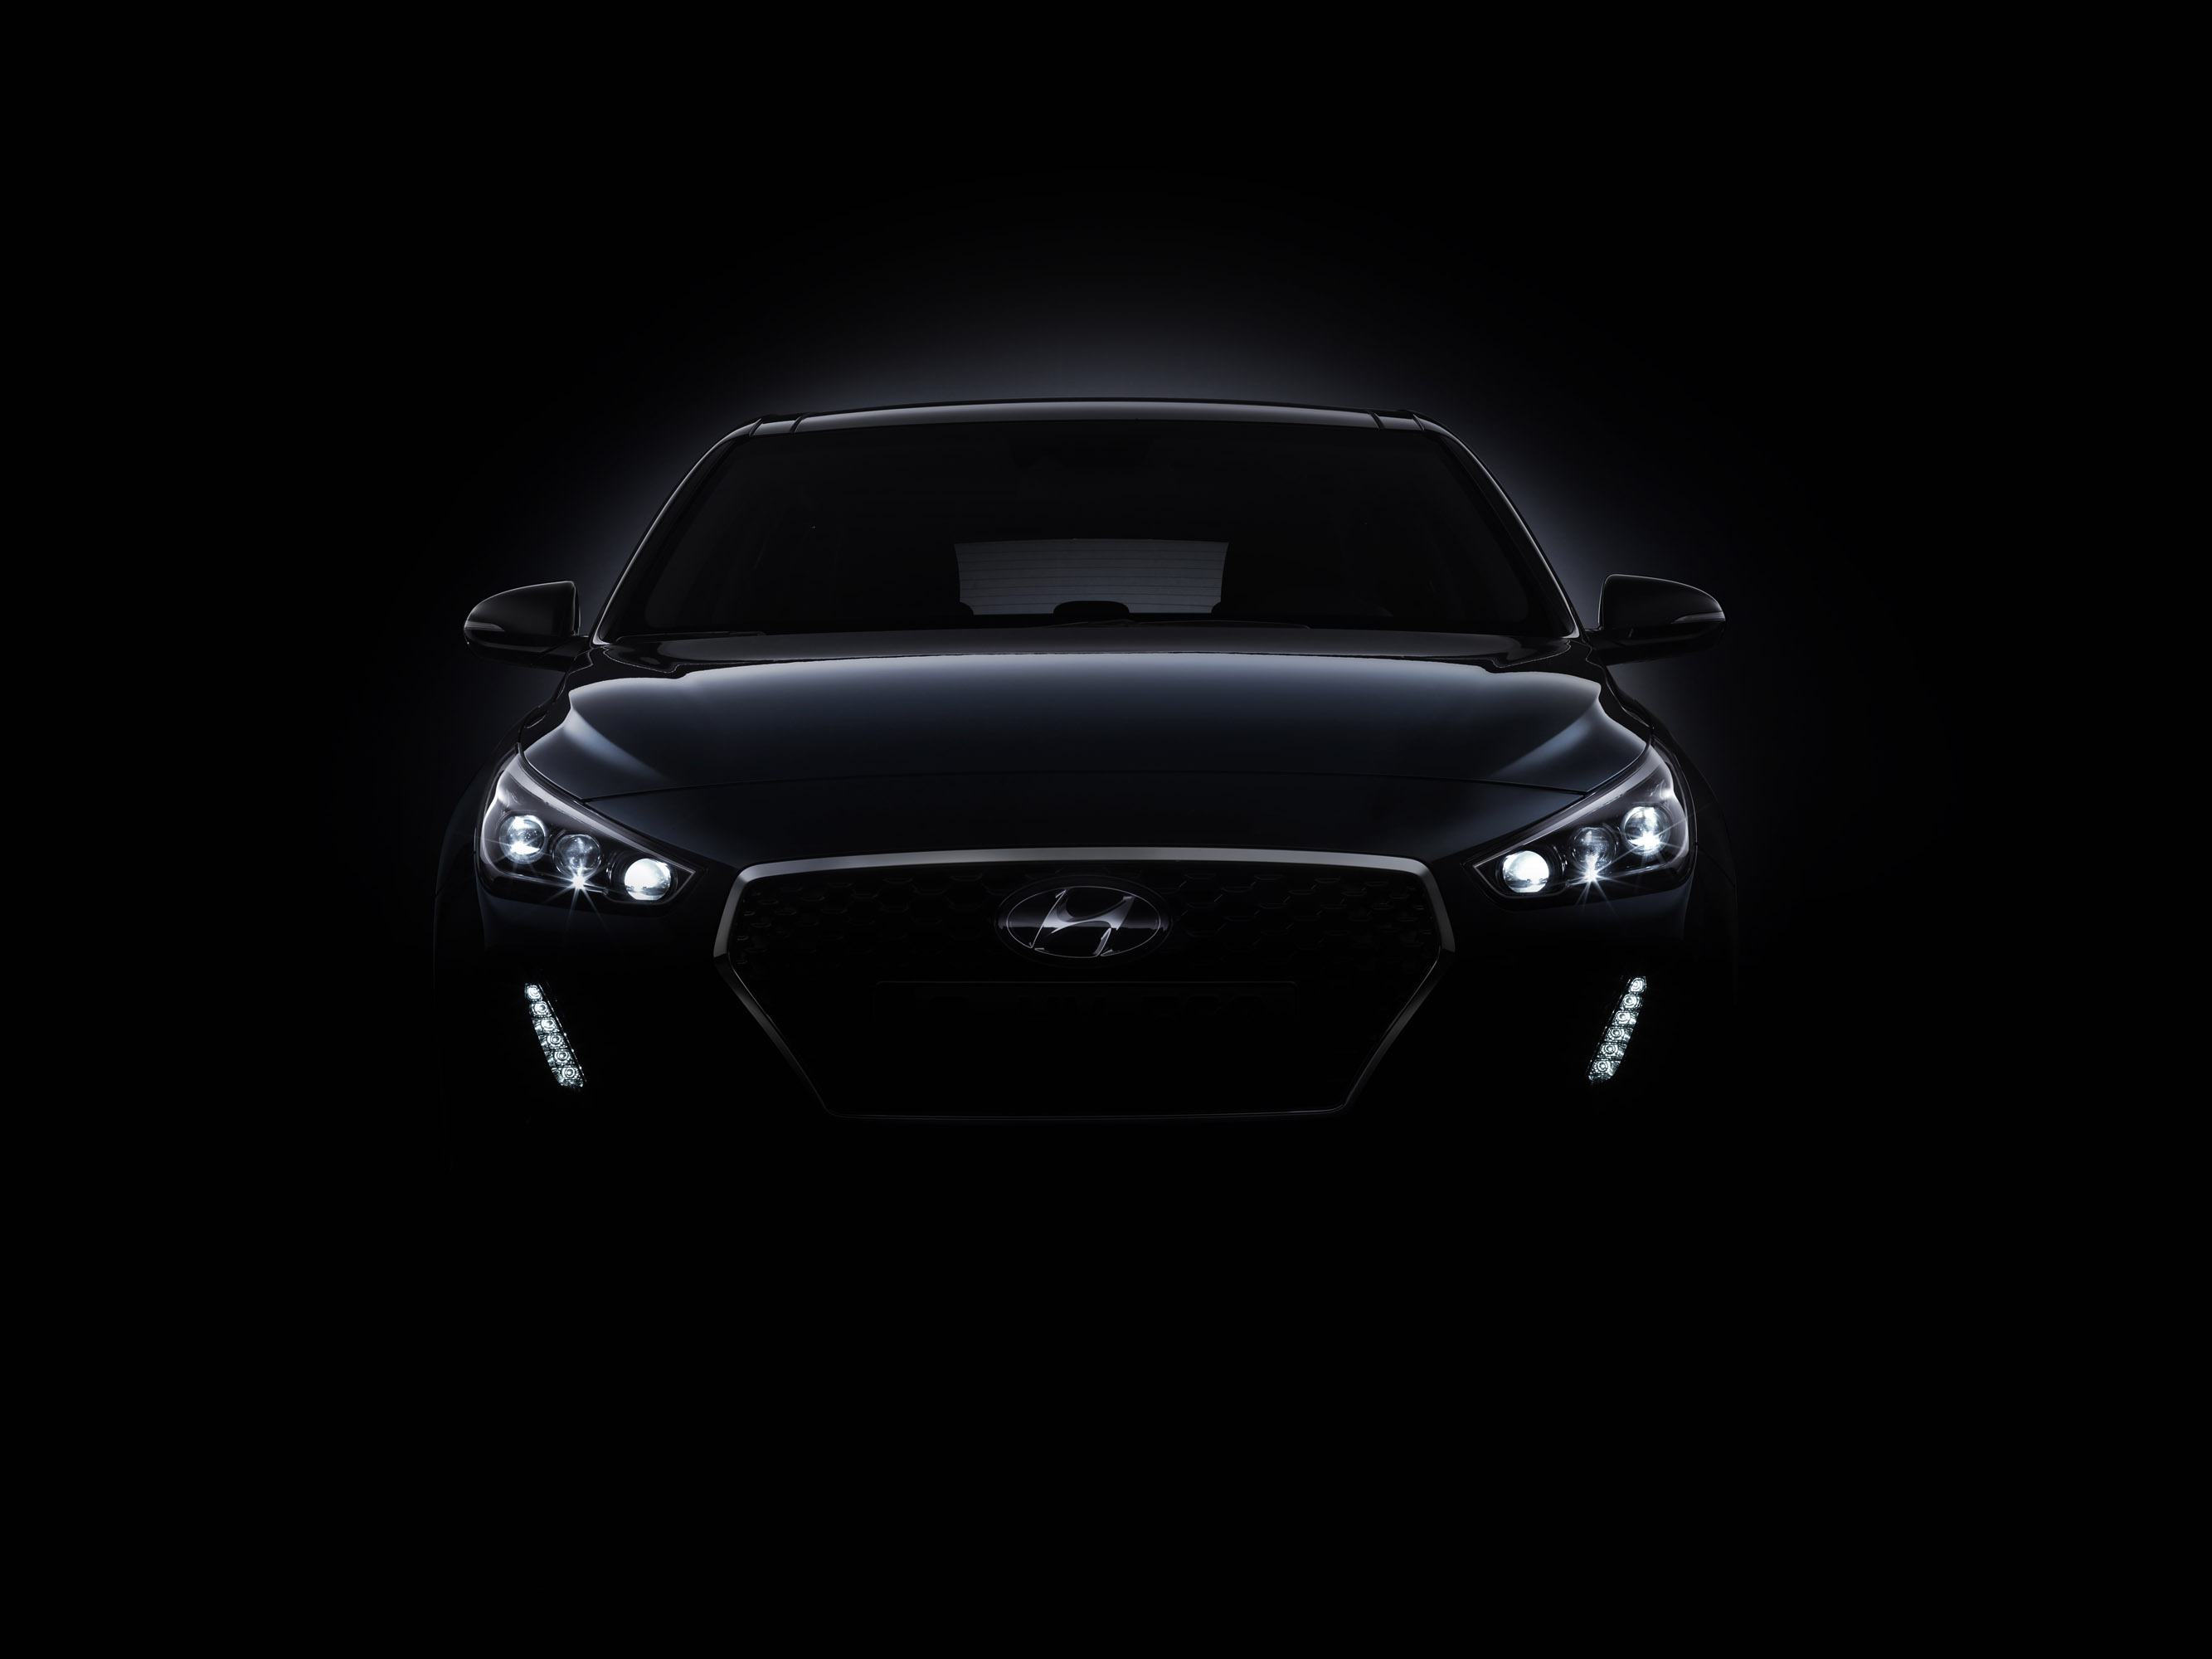 Hyundai i30 Teaser Images